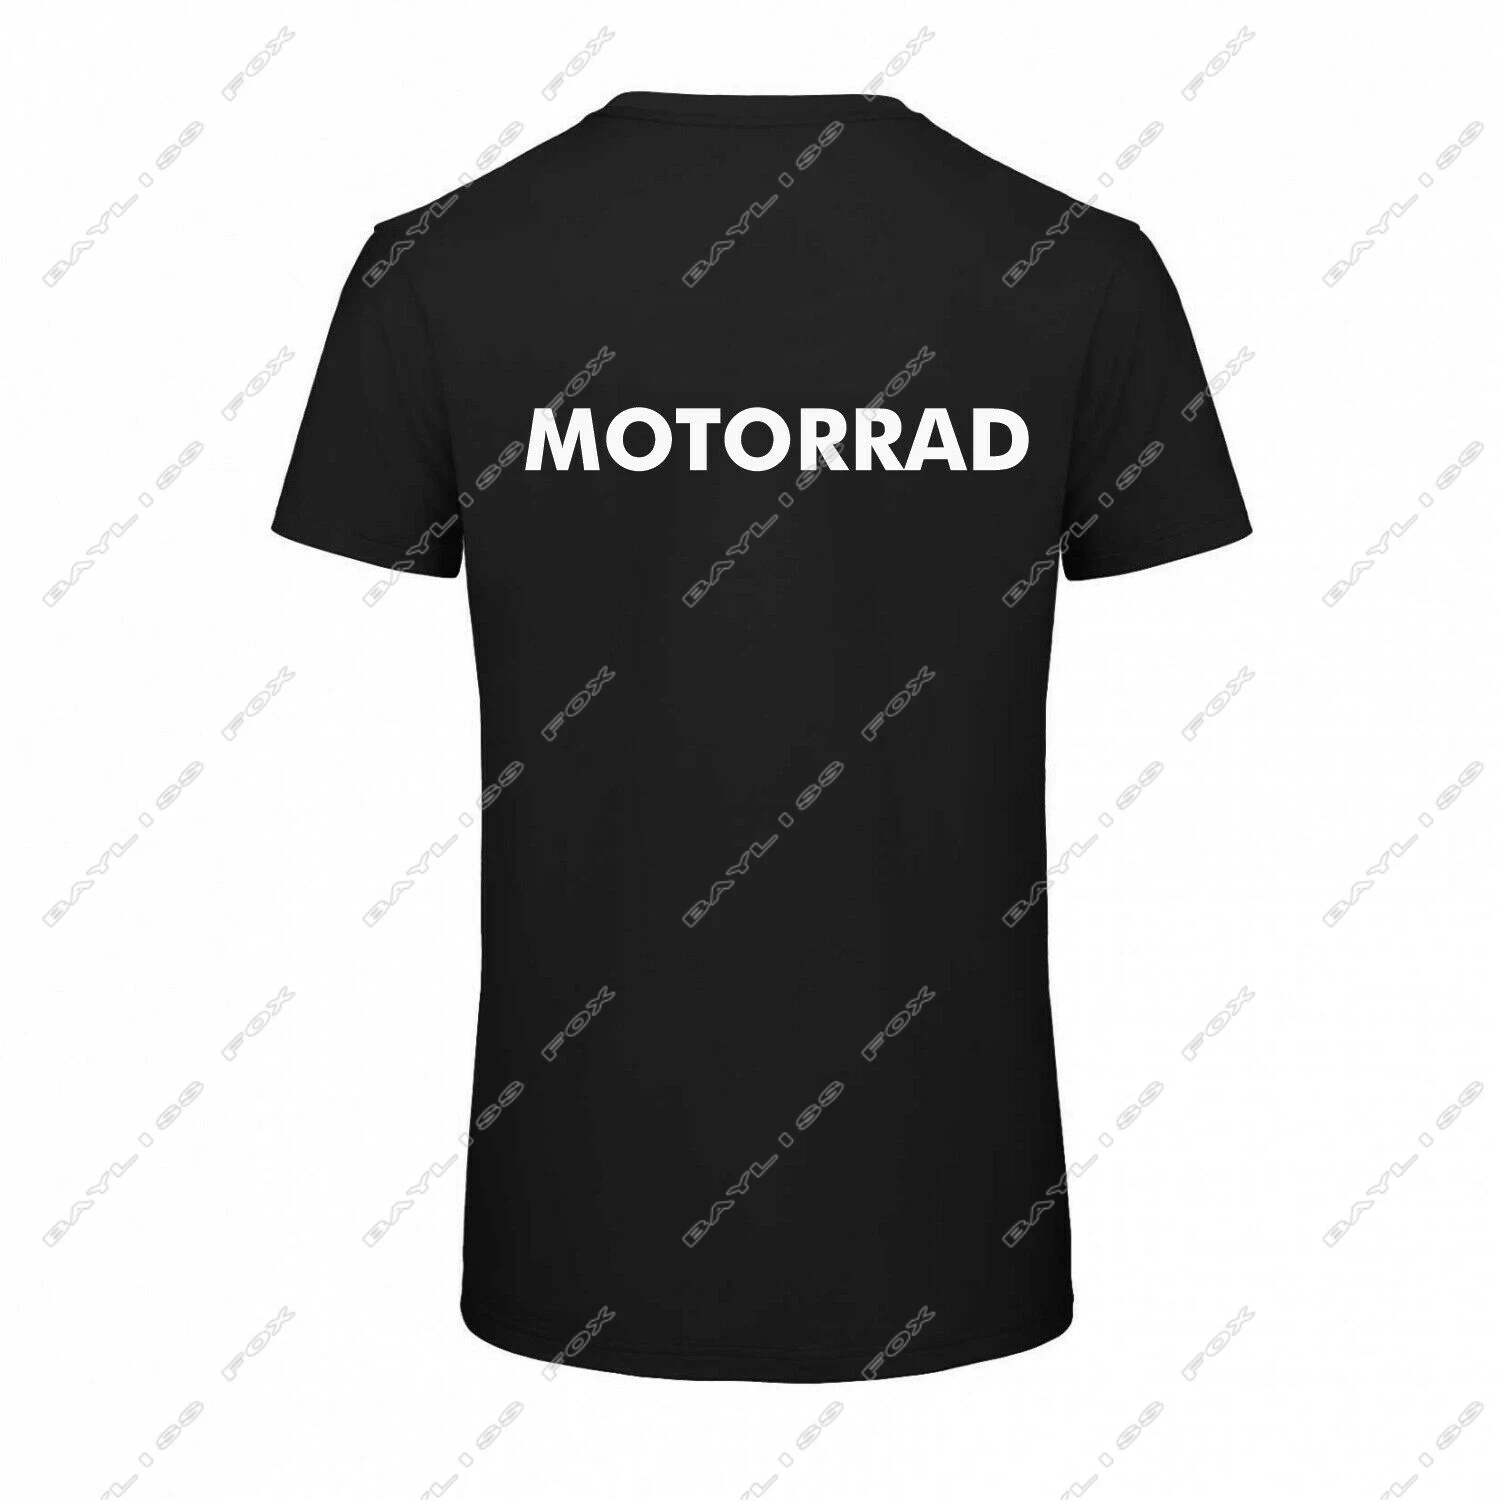 Summer  Knight Motorcycle Motorrad Team Motorsport Superbike Racing Car Enduro T-Shirt Men's Short Quick Dry Jersey enlarge